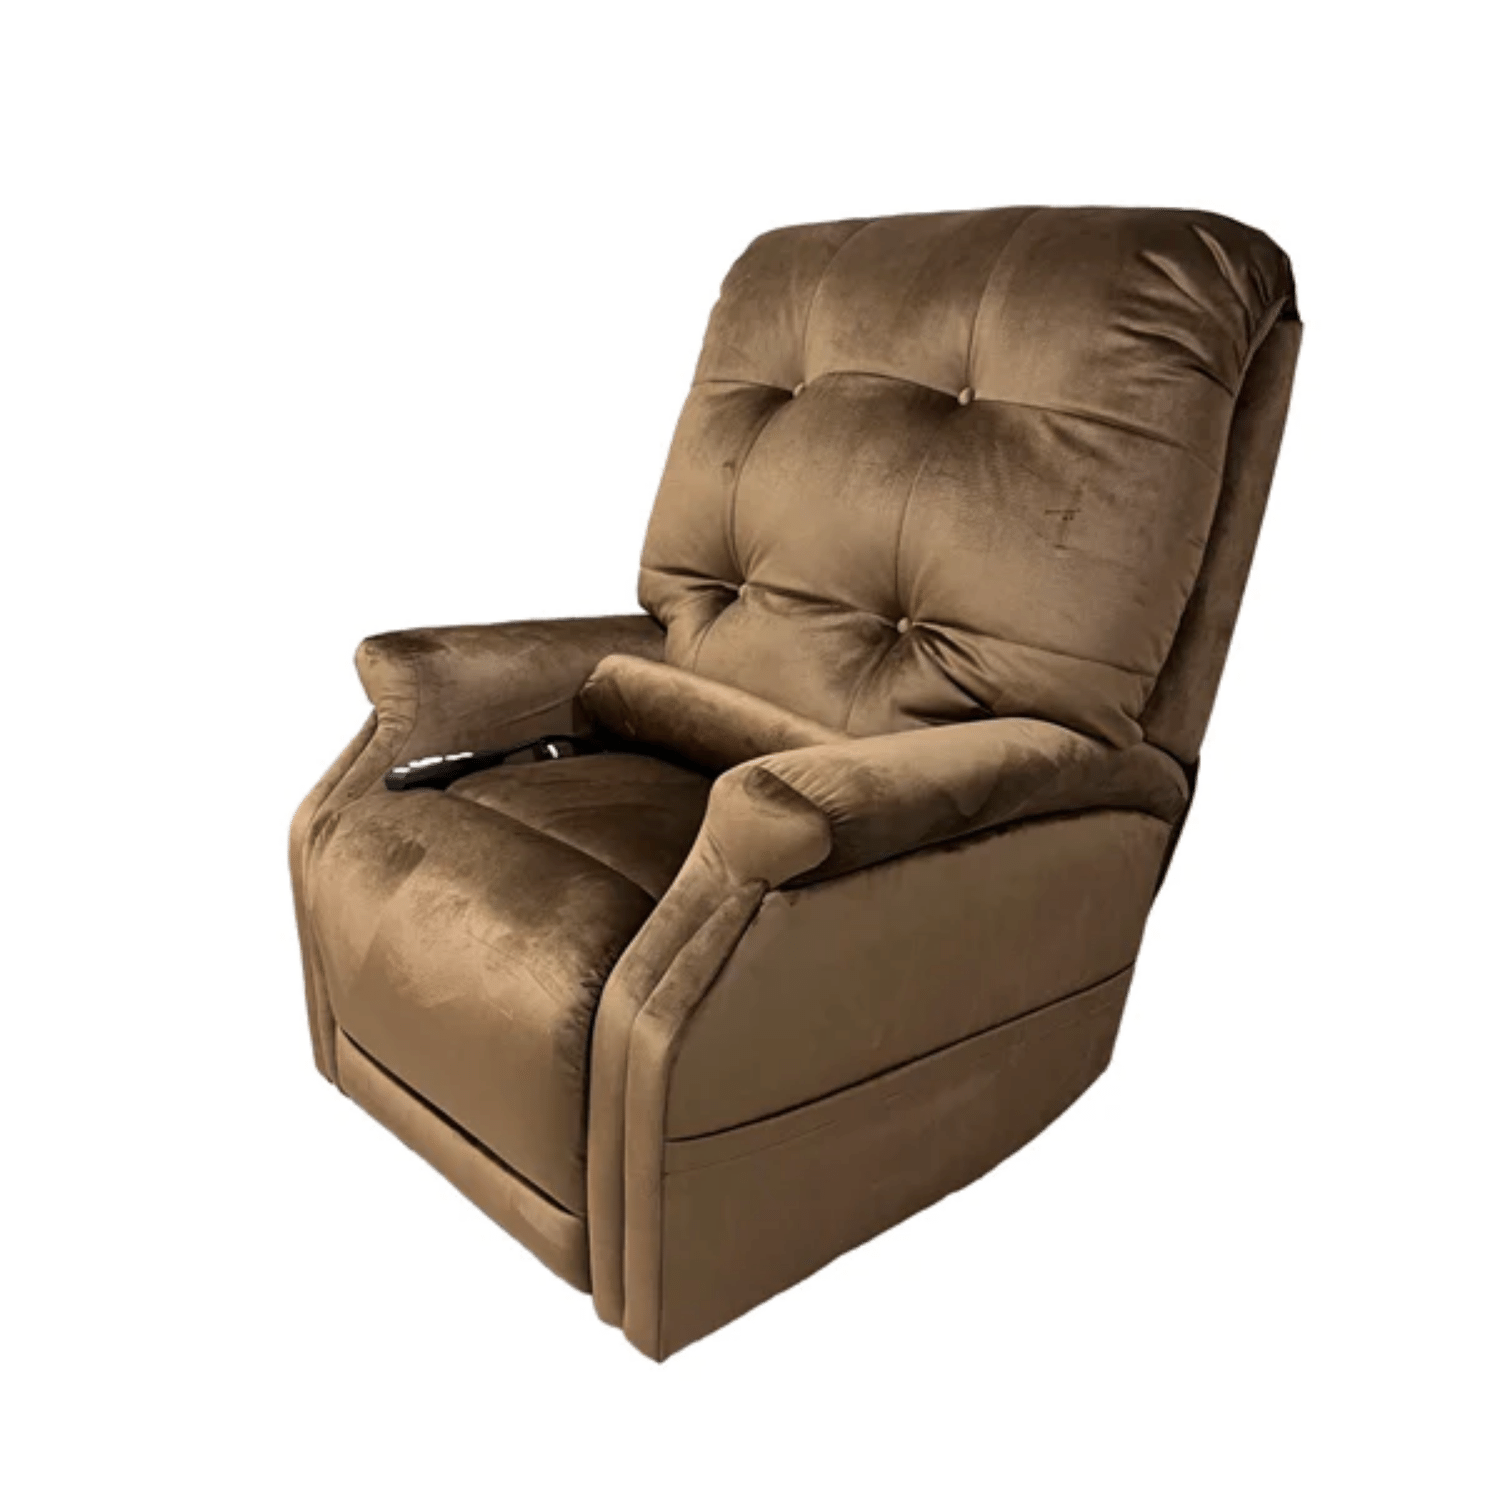 JOURNEY Perfect Sleep Chair Power Recliner - Petite 2 Zone